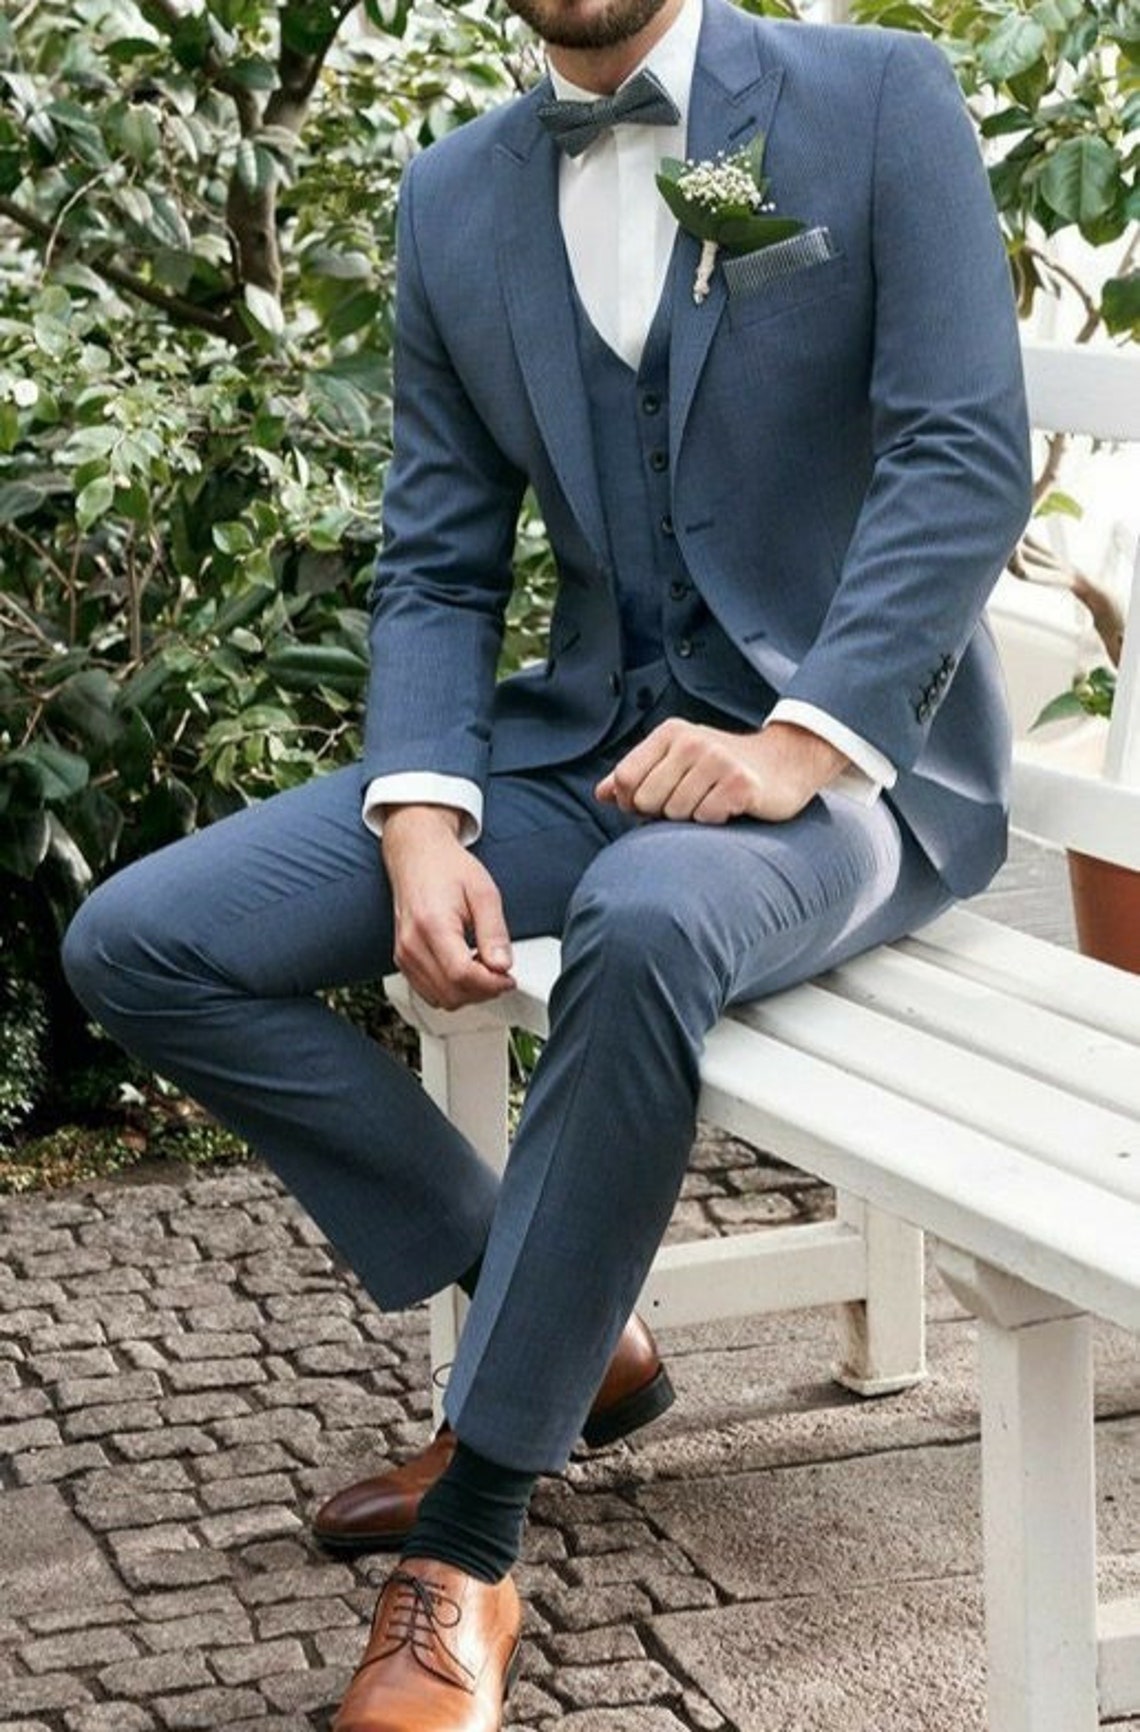 GROOM WEDDING SUIT Men Formal Suit Formal Fashion Suit - Etsy